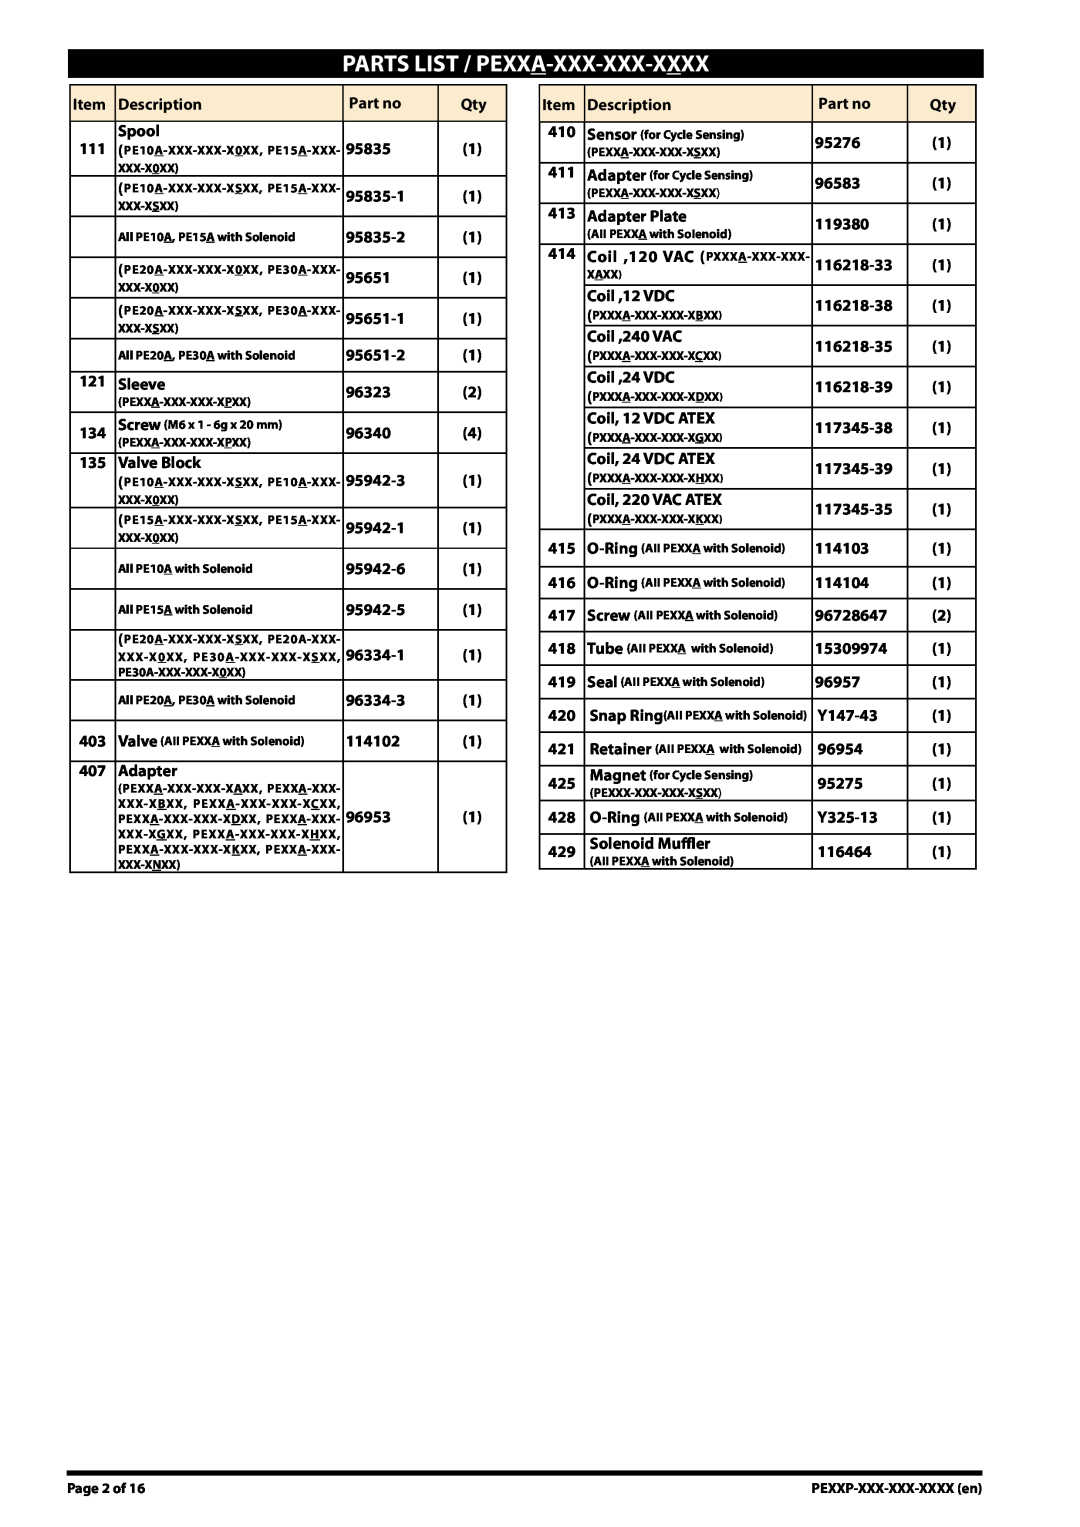 Ingersoll-Rand PE20X-XXX-XXX-XXXX, PE30X-XXX-XXX-XXXX, PE10X-XXX-XXX-XXXX manual Parts List / Pexxa-Xxx-Xxx-Xxxx, Page of 